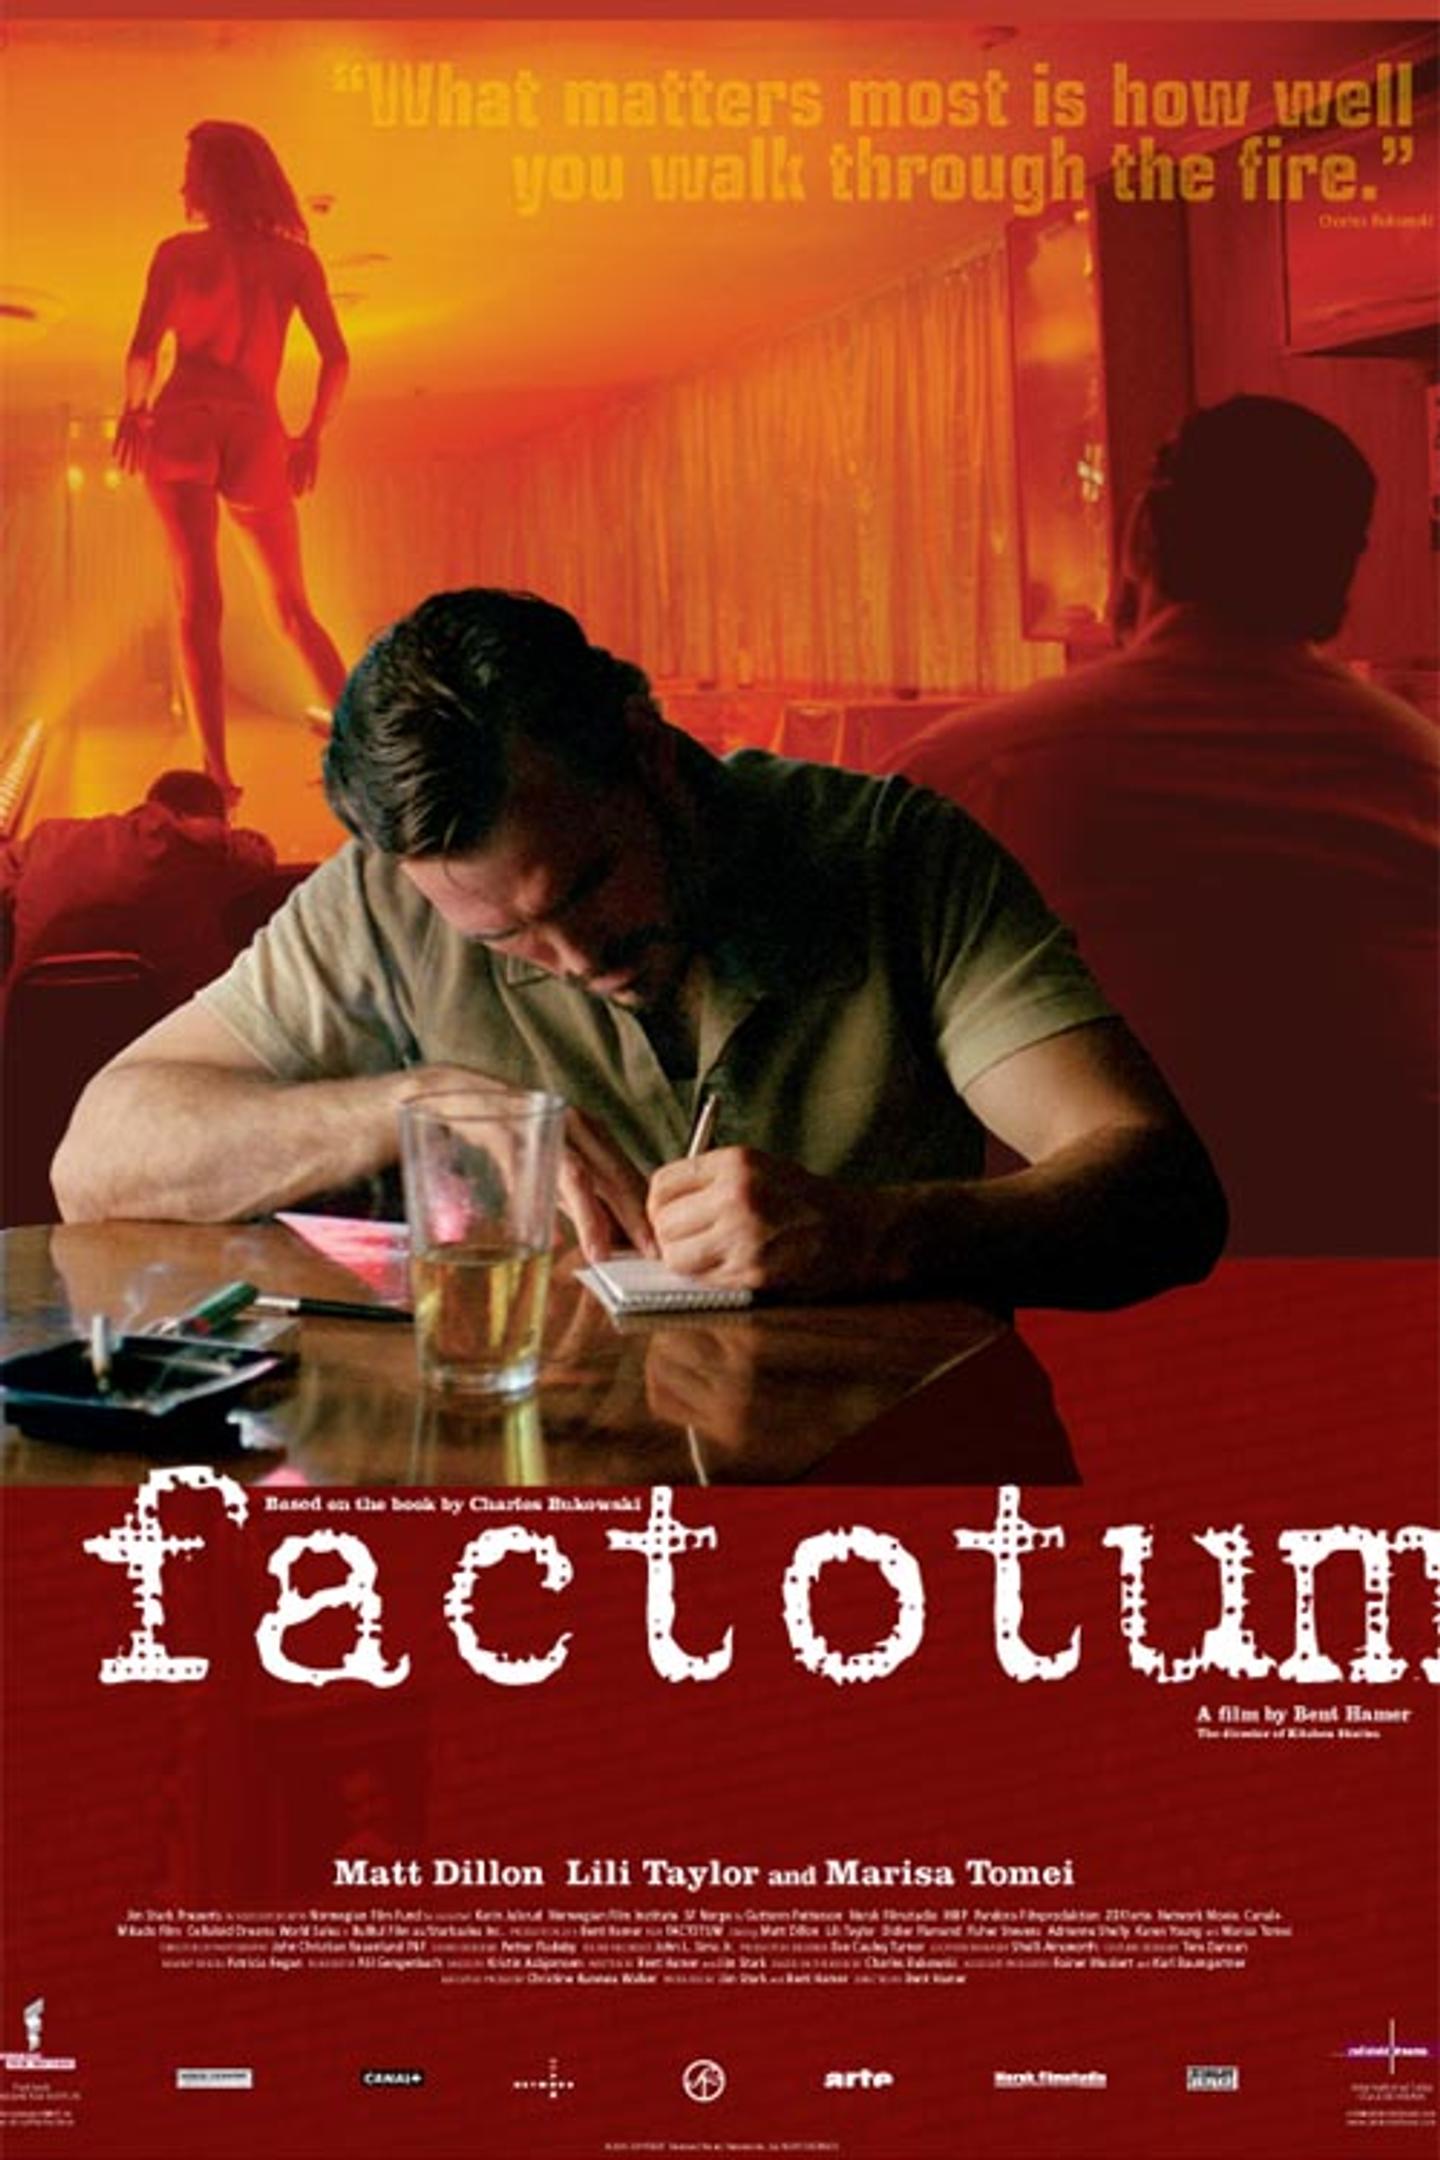 Plakat for 'Factotum'